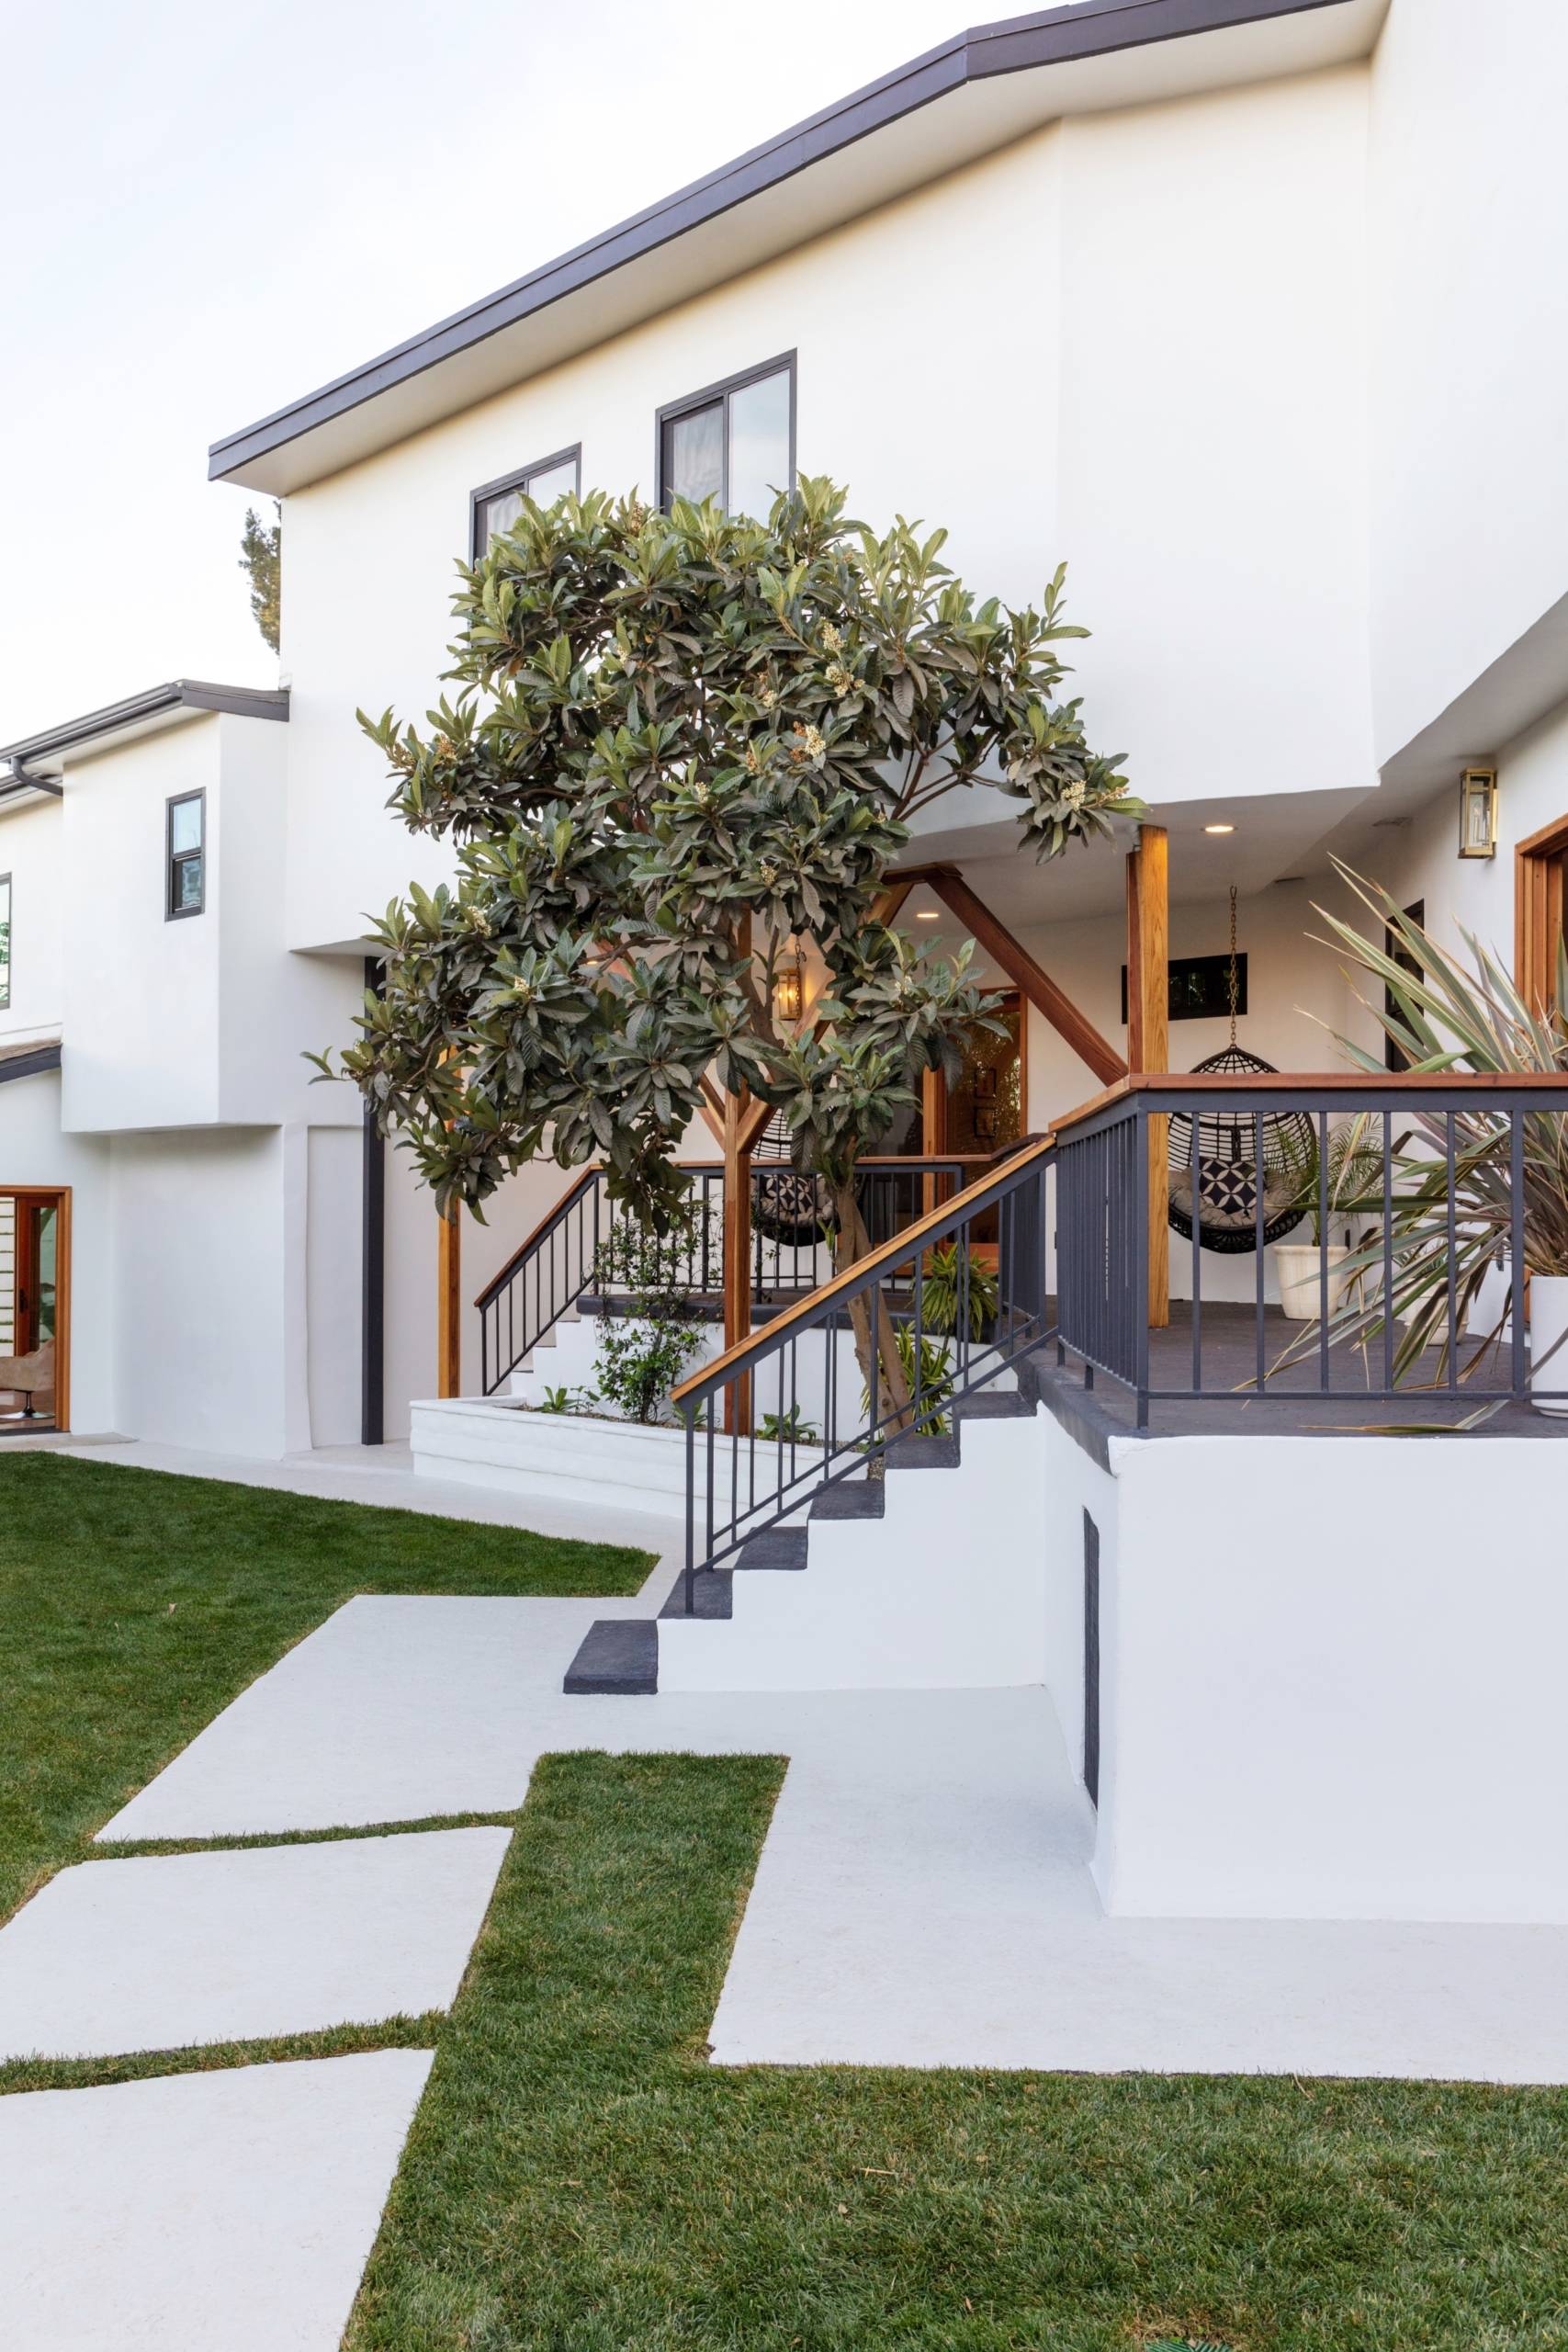 exterior home design styles